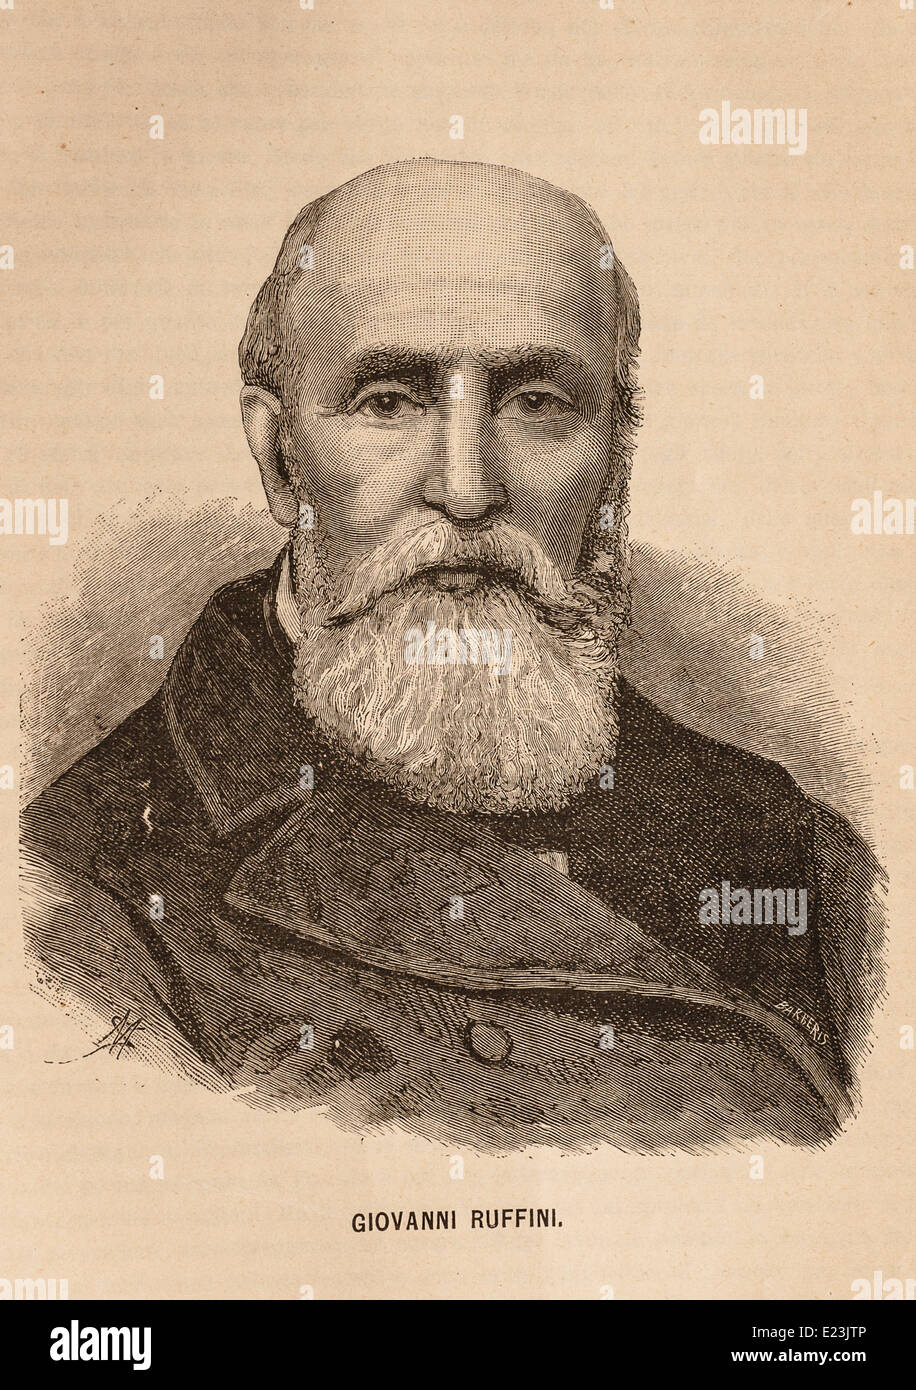 Giuseppe Mazzini aus dem Buch der Jessie W. Mario des Lebens von Mazzini. Porträt von Giovanni Ruffini Stockfoto